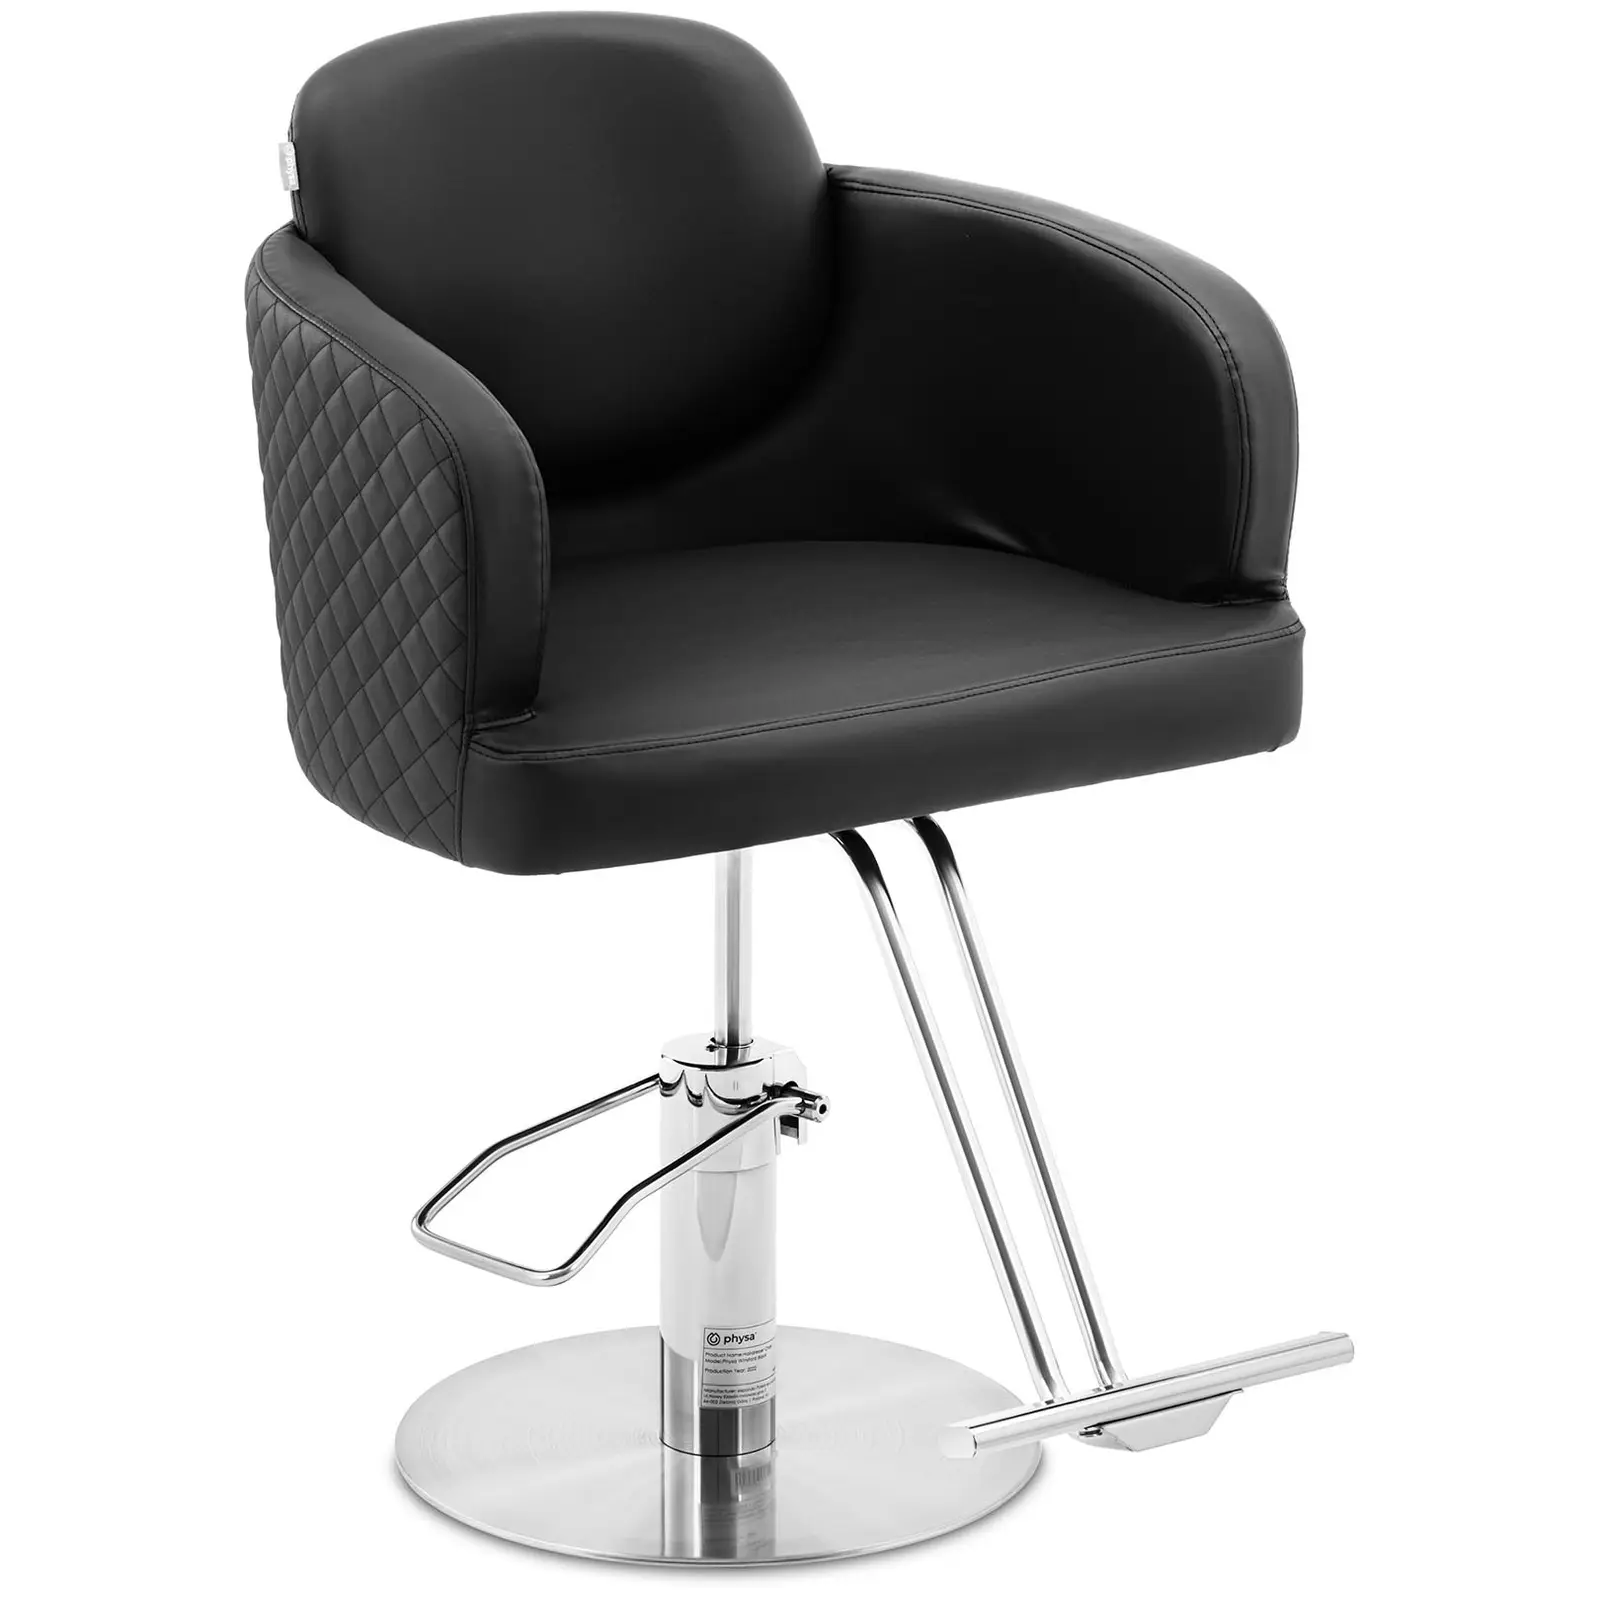 Fotel fryzjerski z podnóżkiem - 870-1020 mm - 200 kg - czarny, srebrny